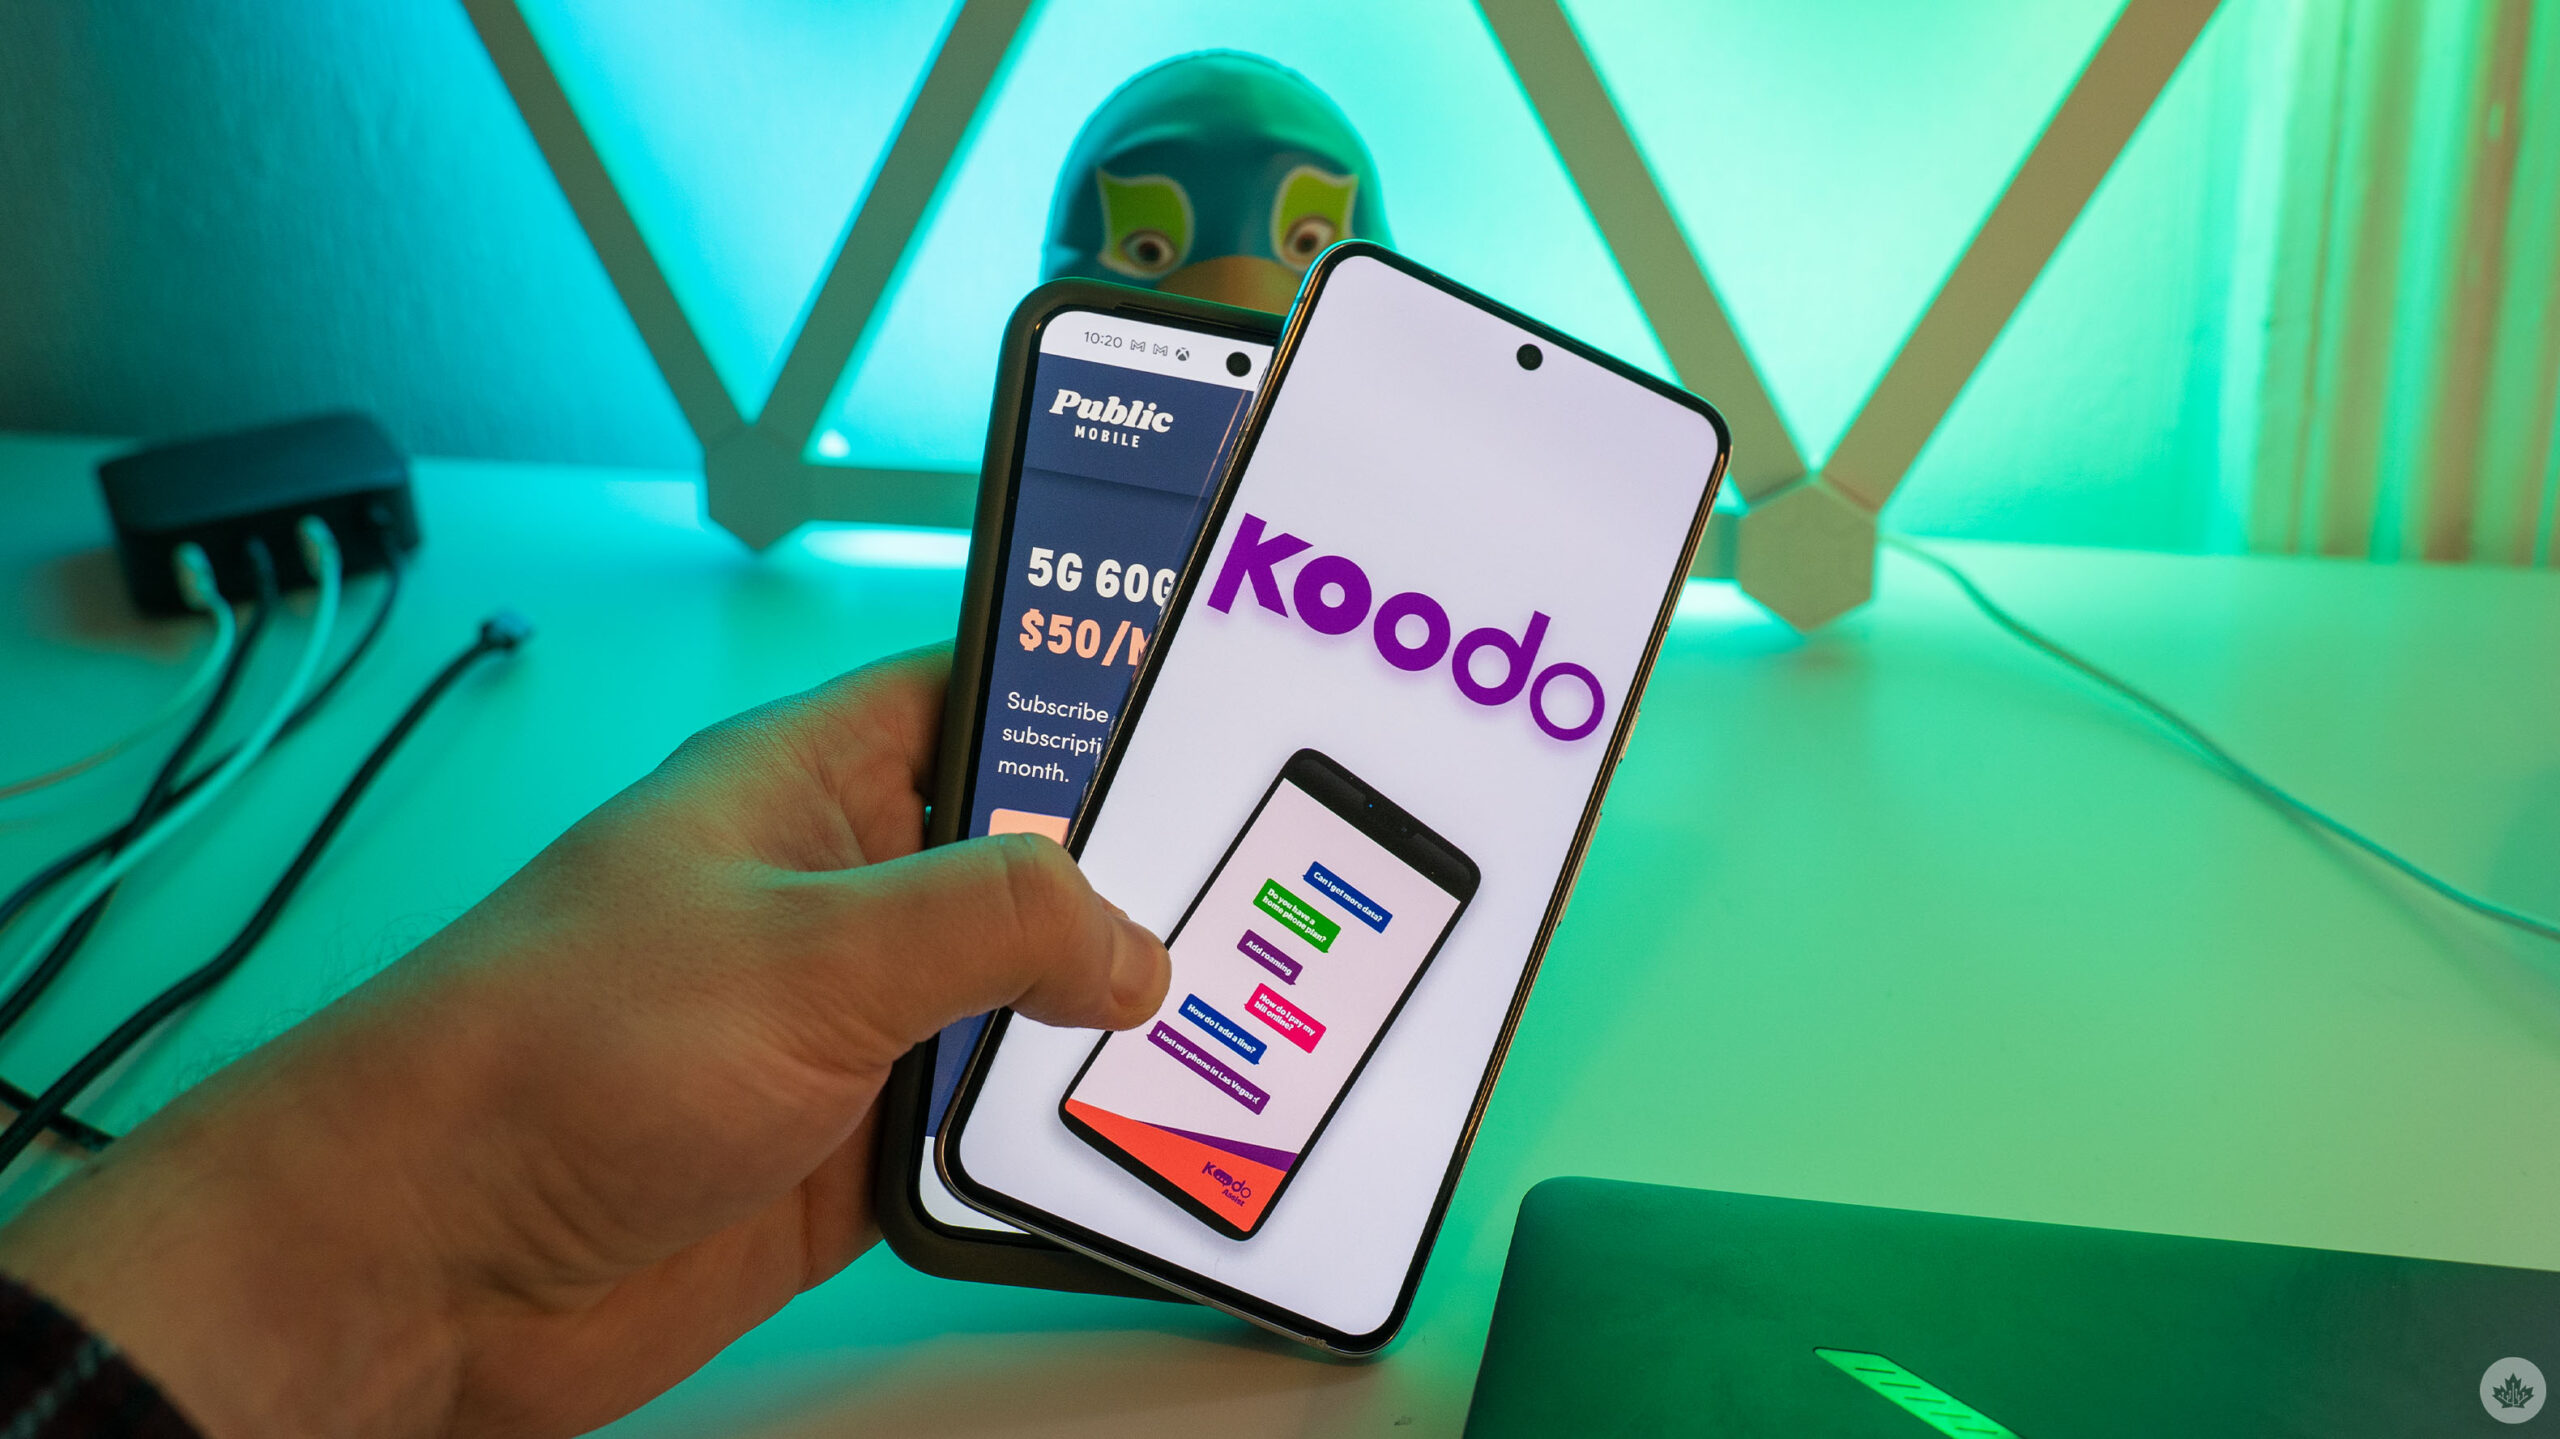 Koodo and Public Mobile logos on smartphones.